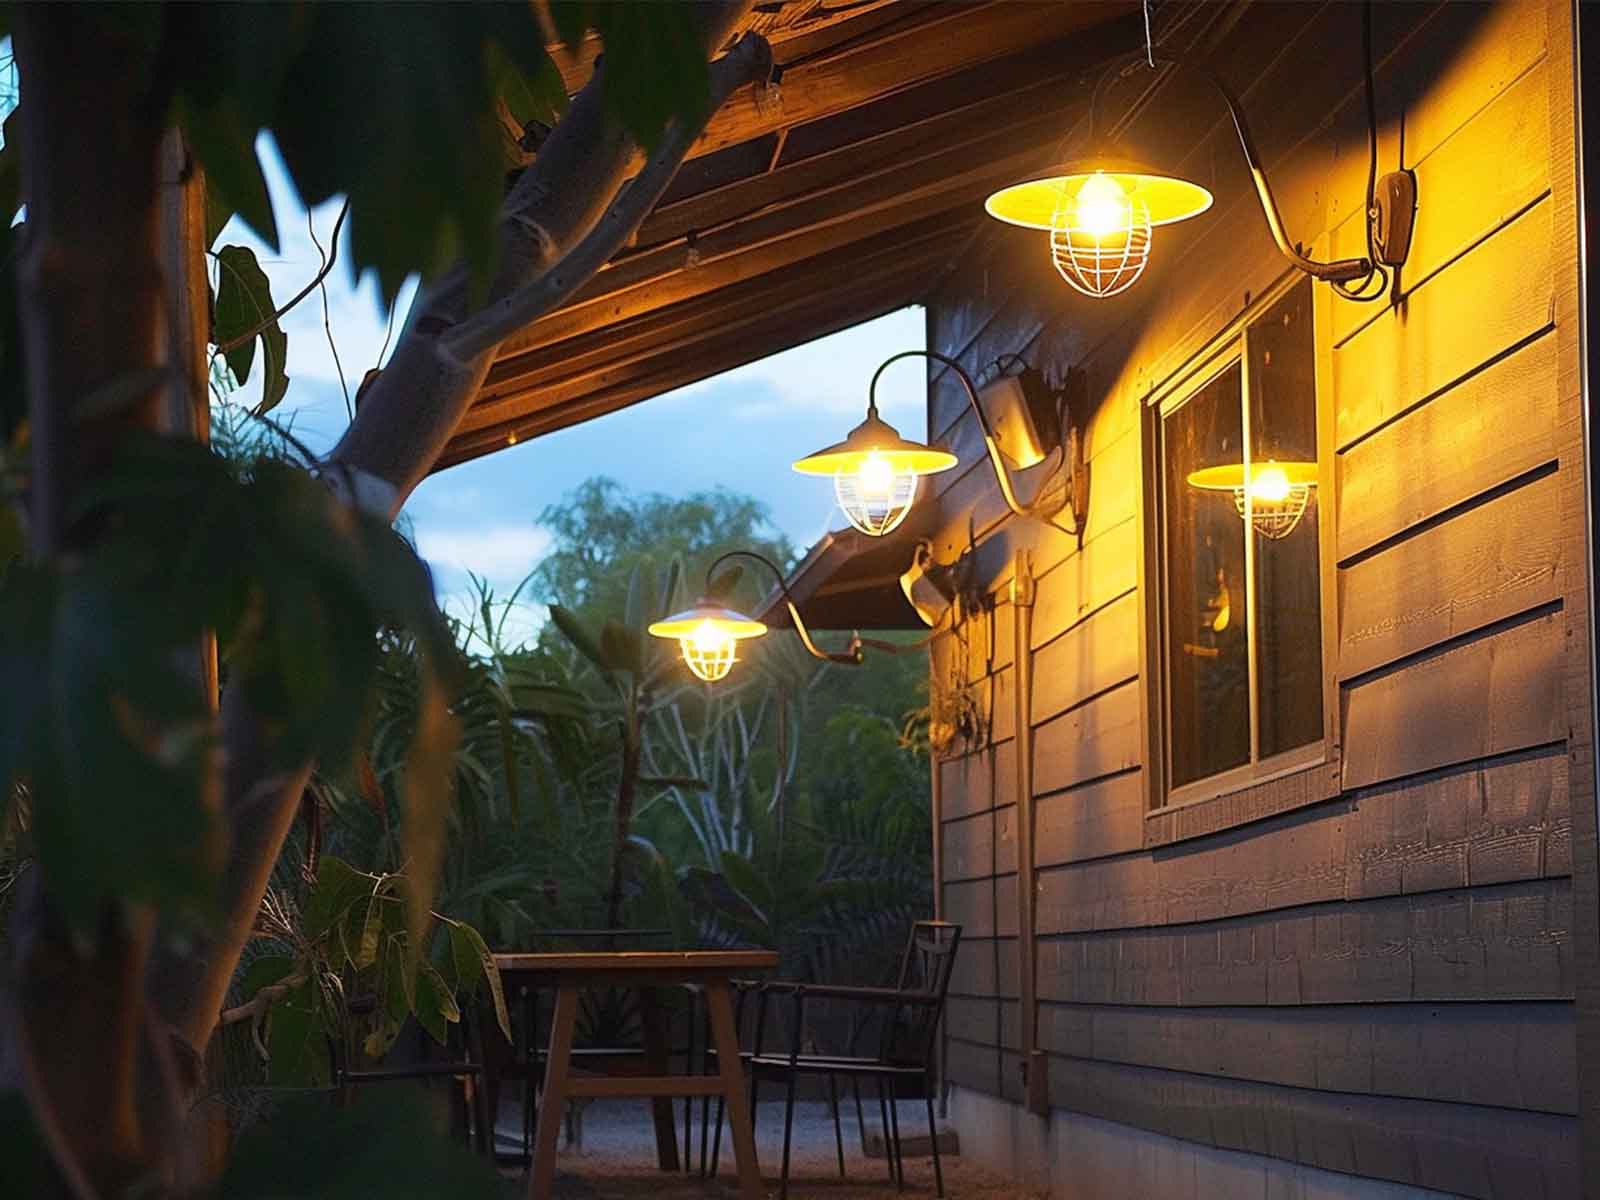 Gooseneck lights installed on a wall near a garden dining area